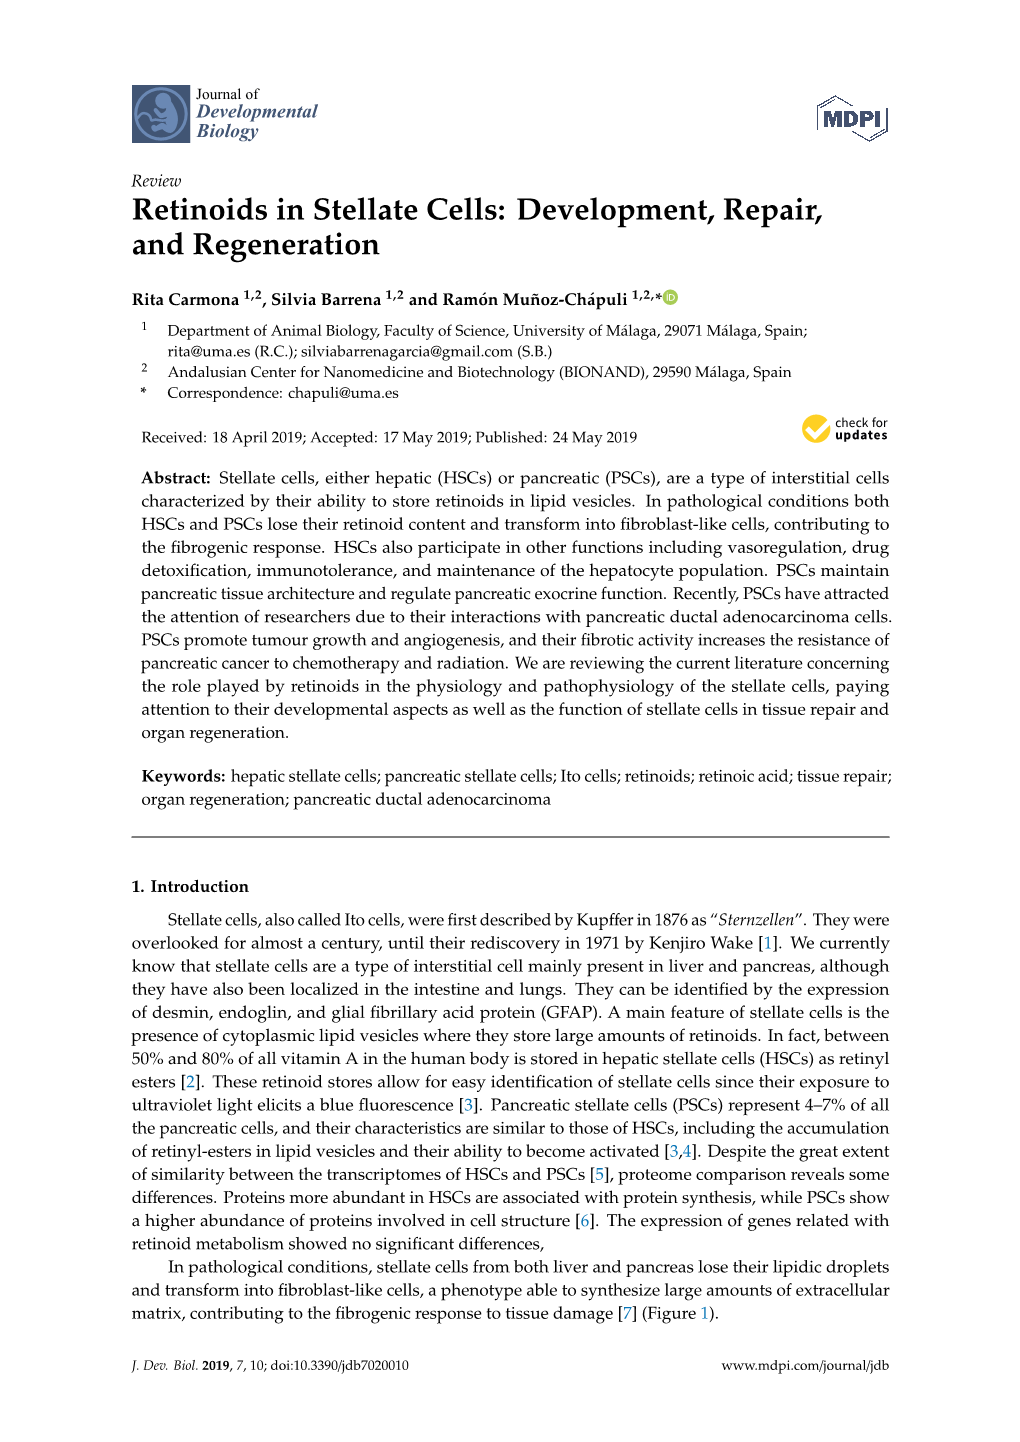 Retinoids in Stellate Cells: Development, Repair, and Regeneration